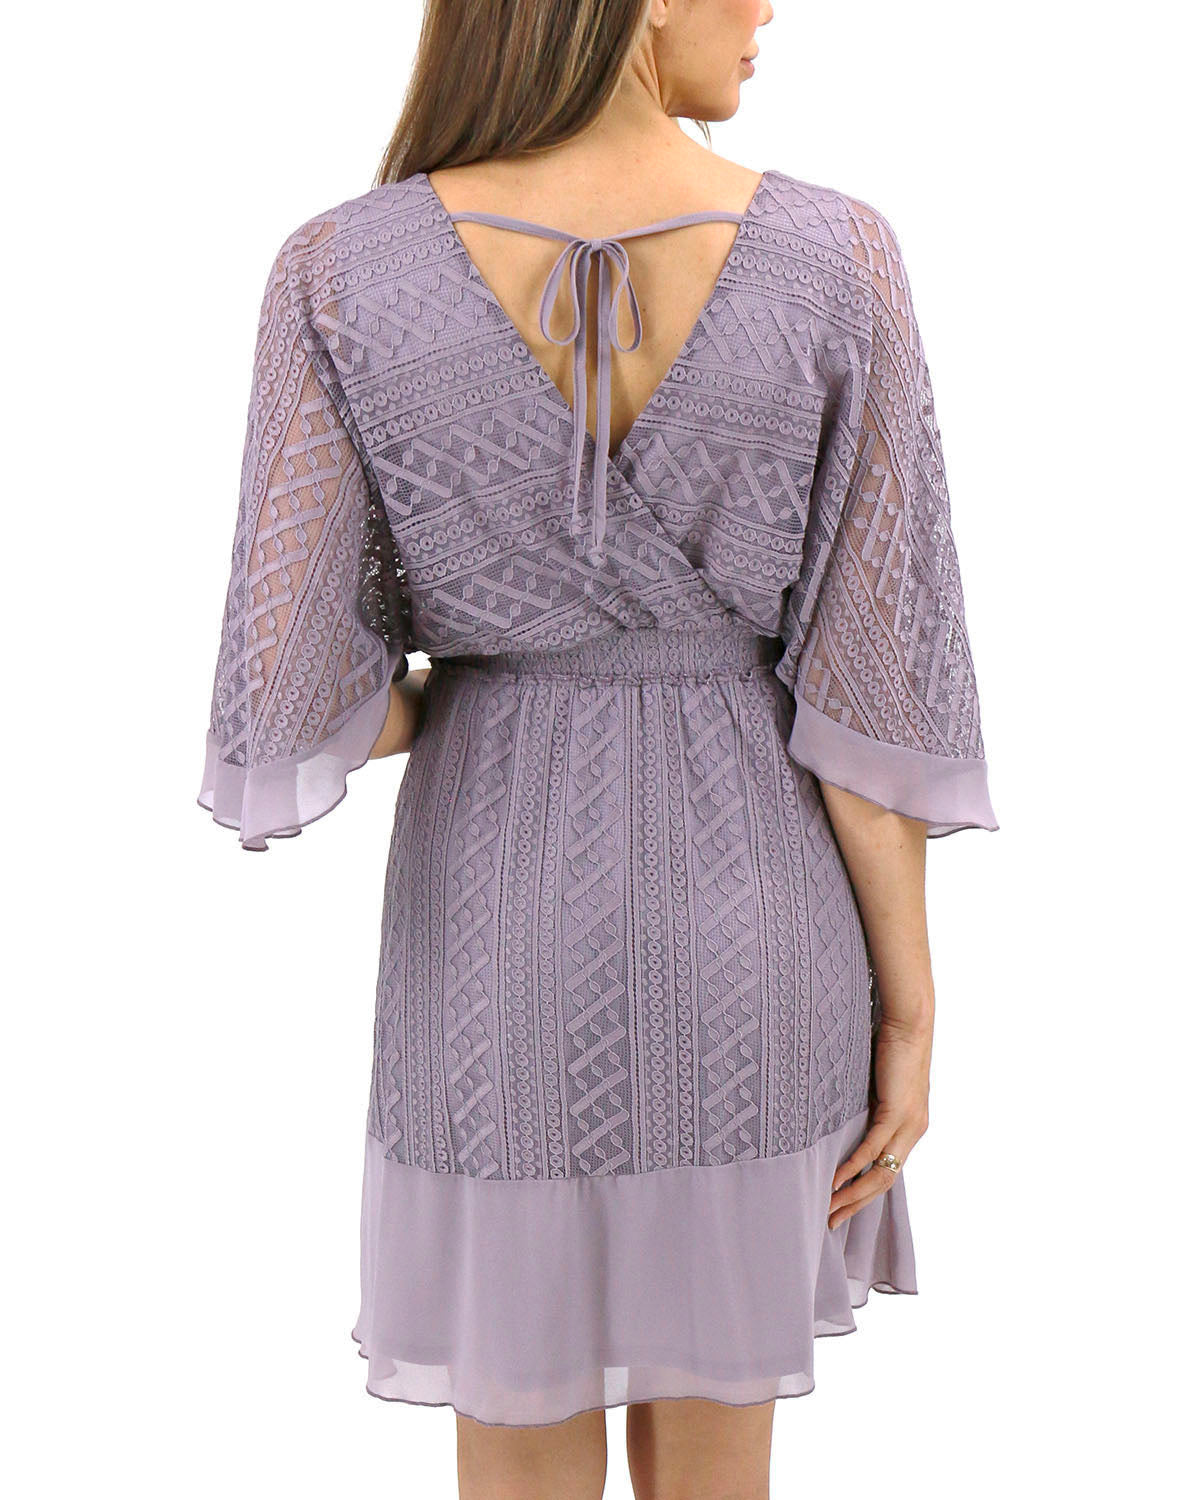 Lace Angel Sleeve Dress - FINAL SALE